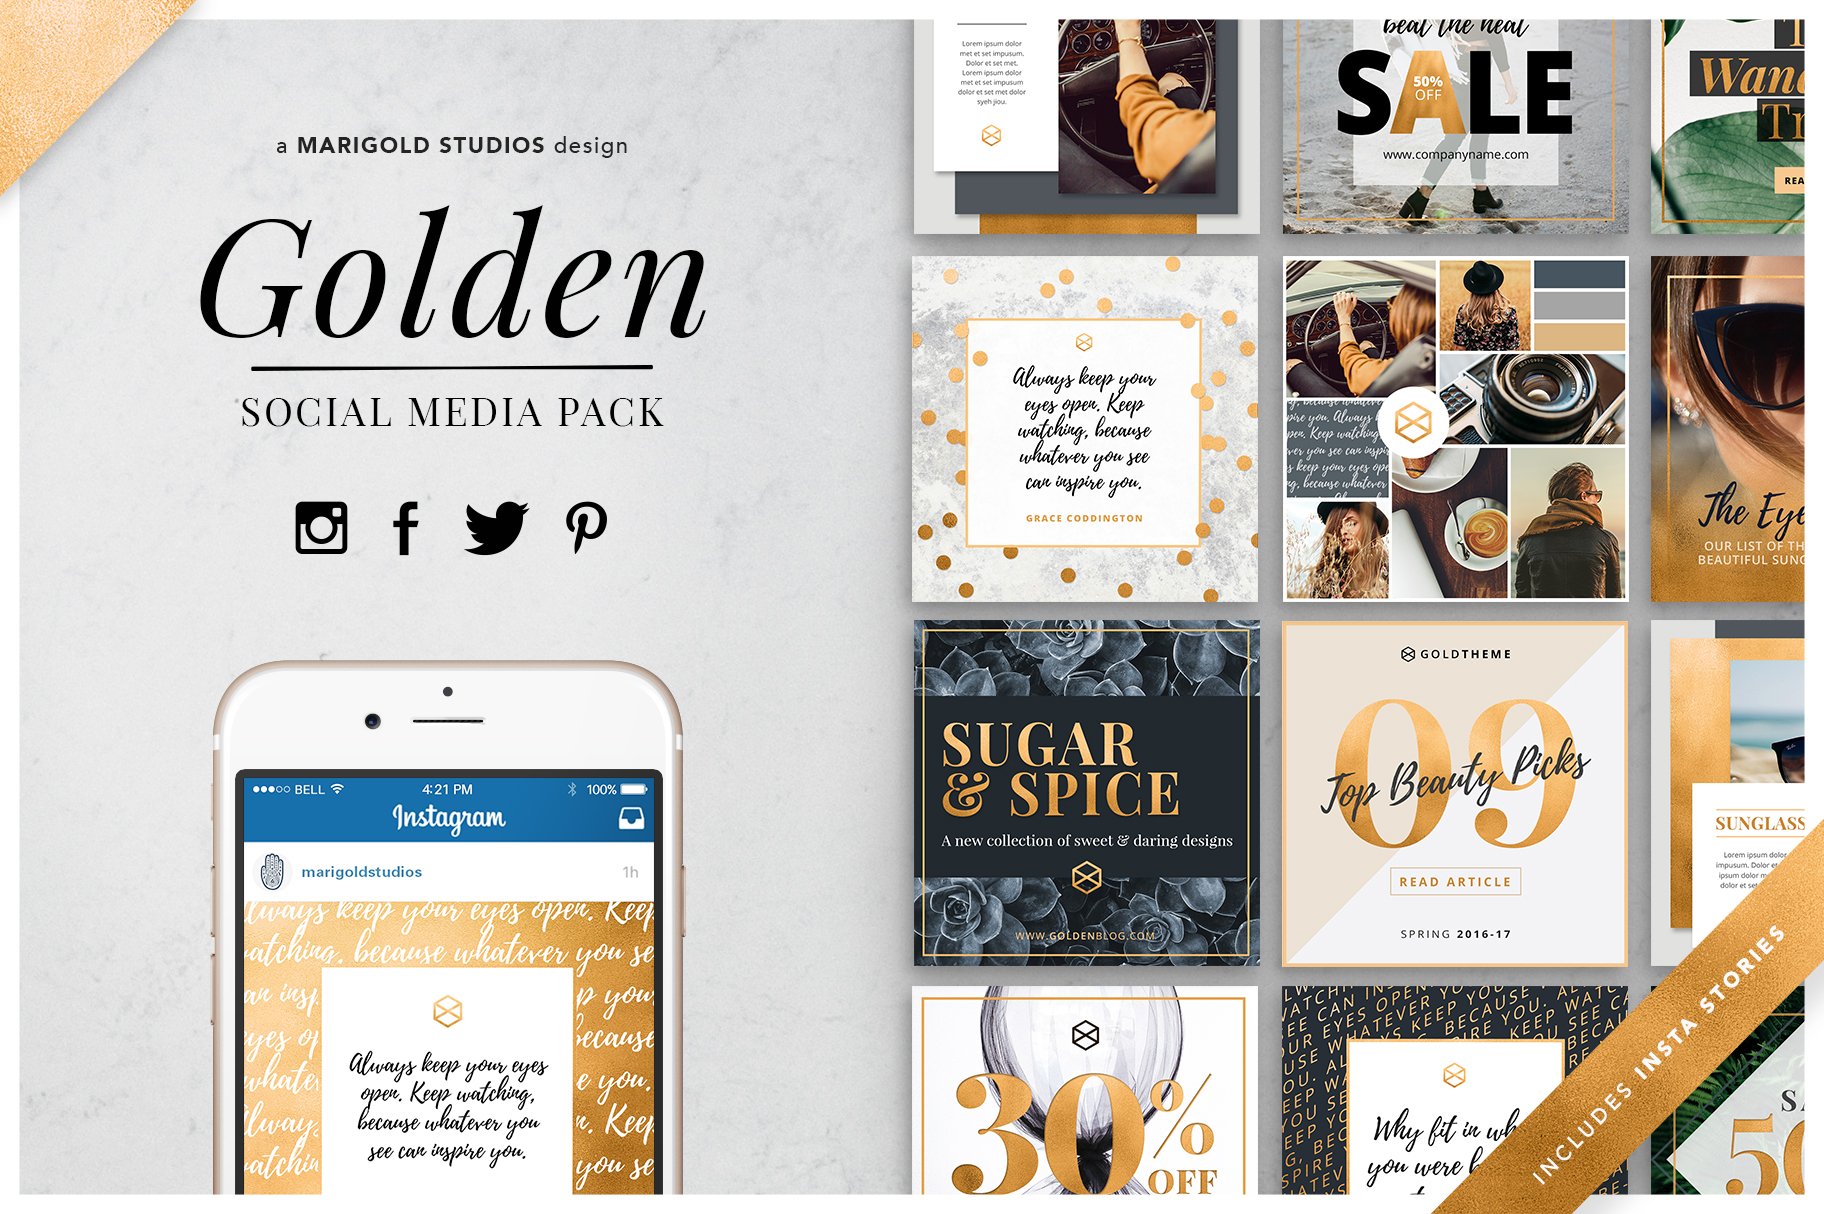 GOLDEN | Social Media Pack cover image.